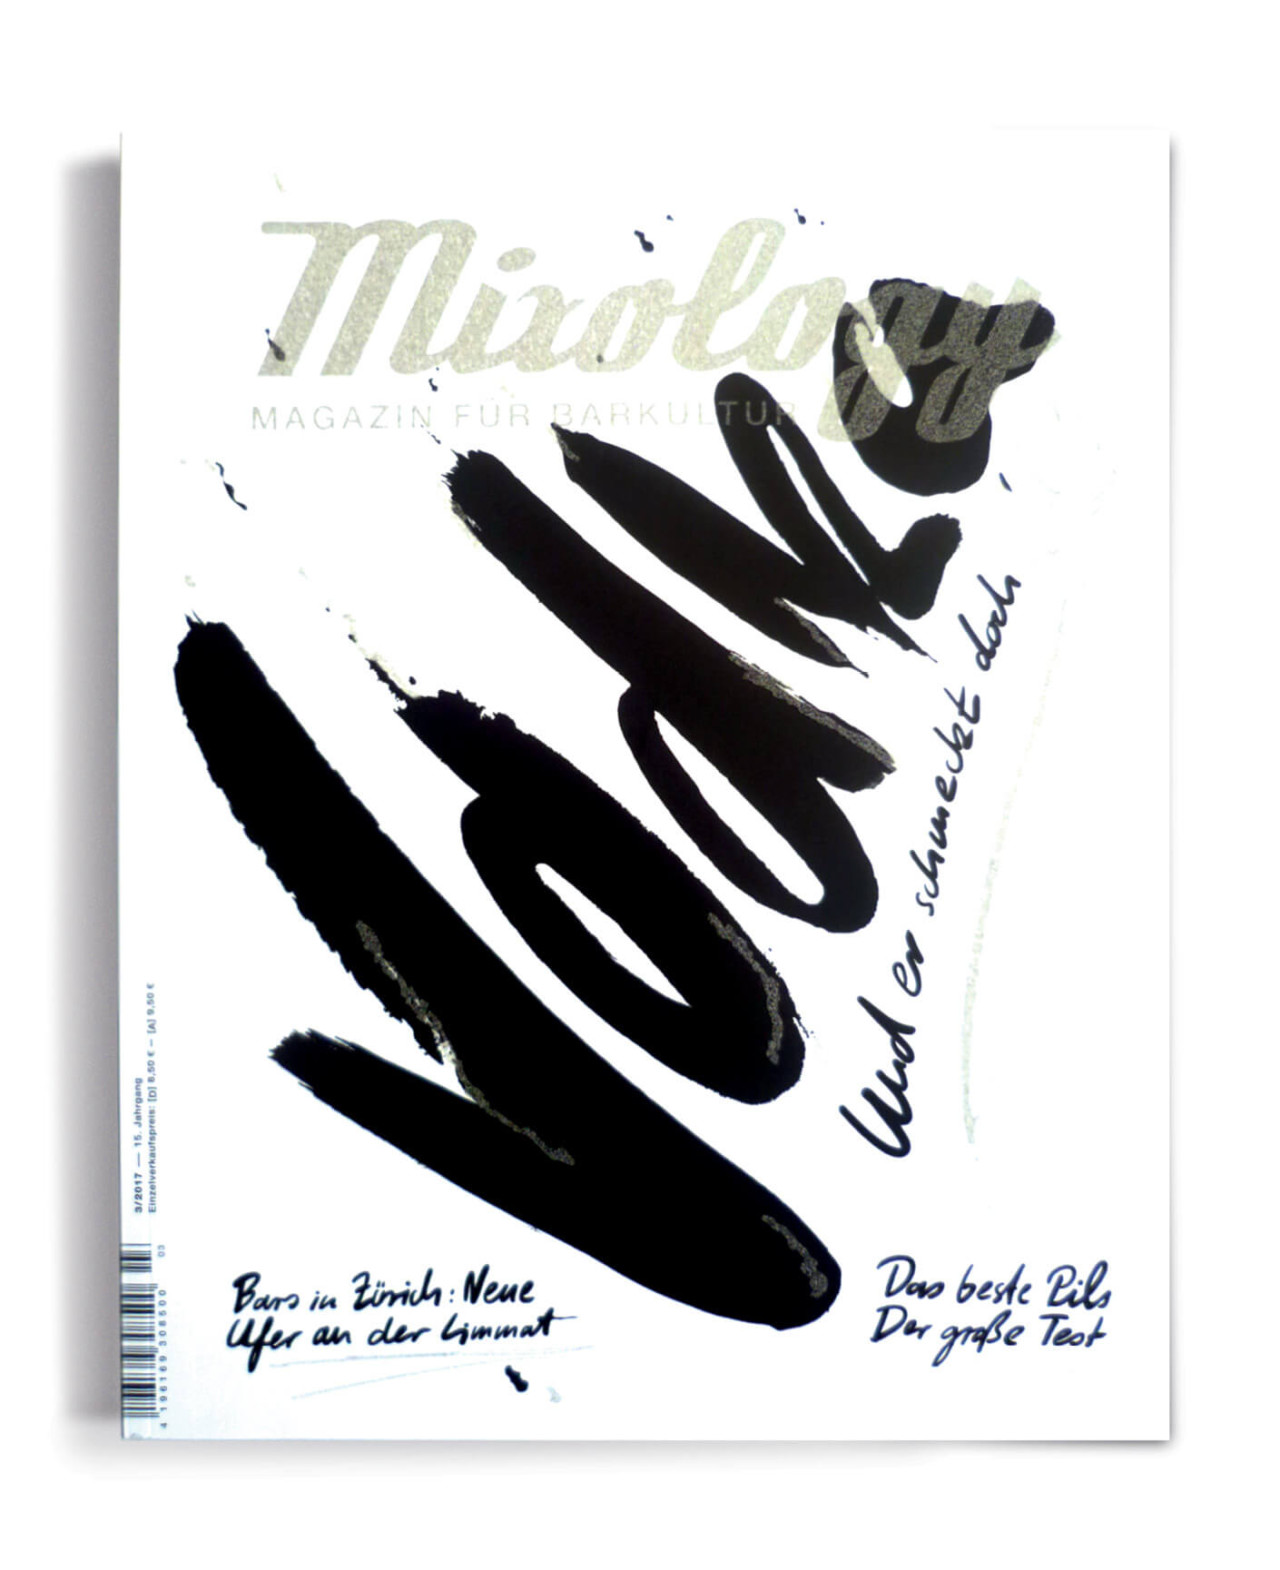 Brian Storm - Illustration & Design Mixology Magazine Cover